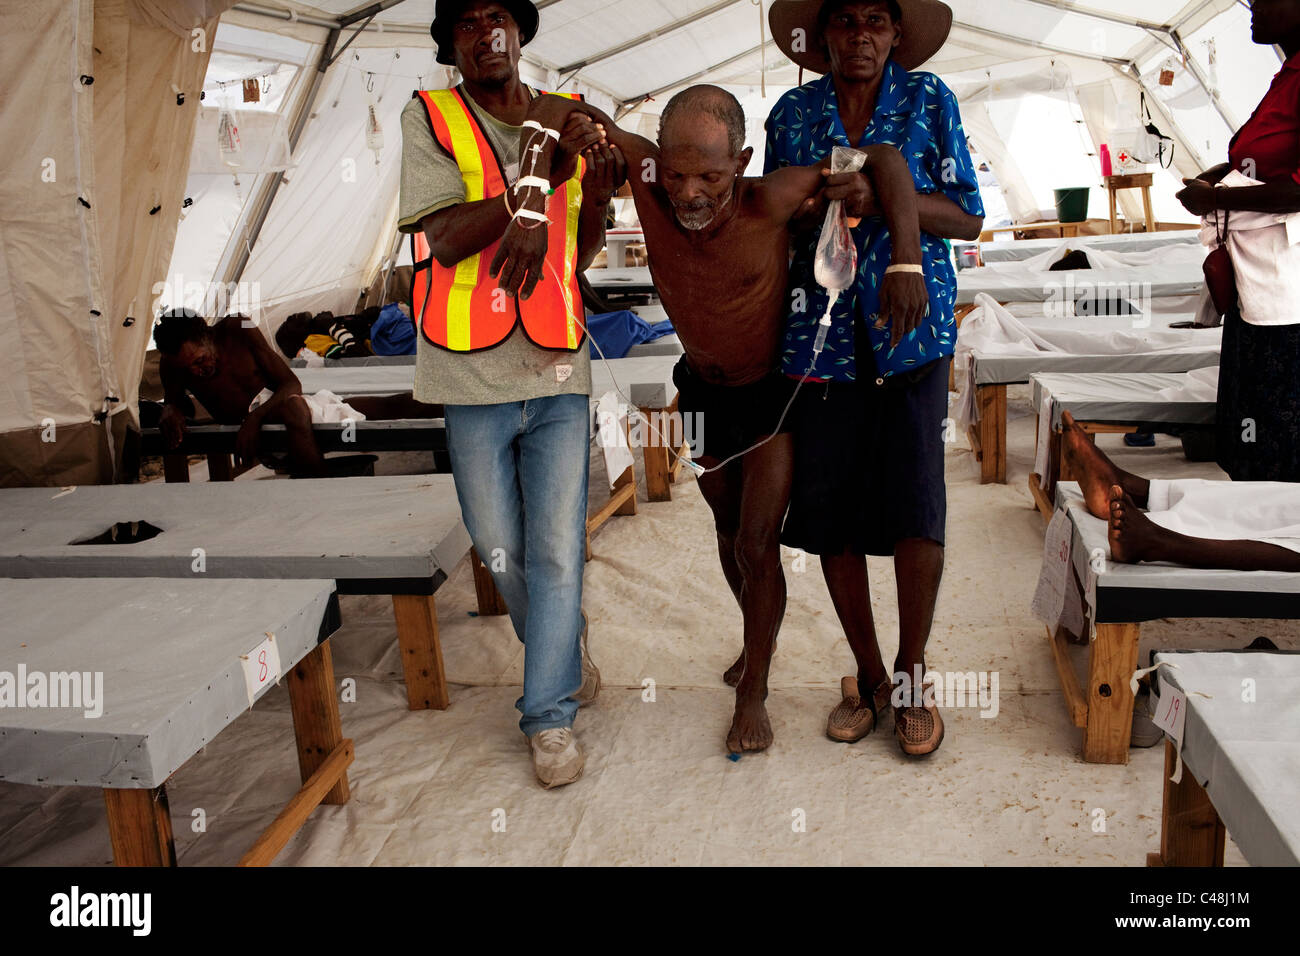 Elderly man weakened by cholera disease is being helped to a bed in tent hospital. Stock Photo